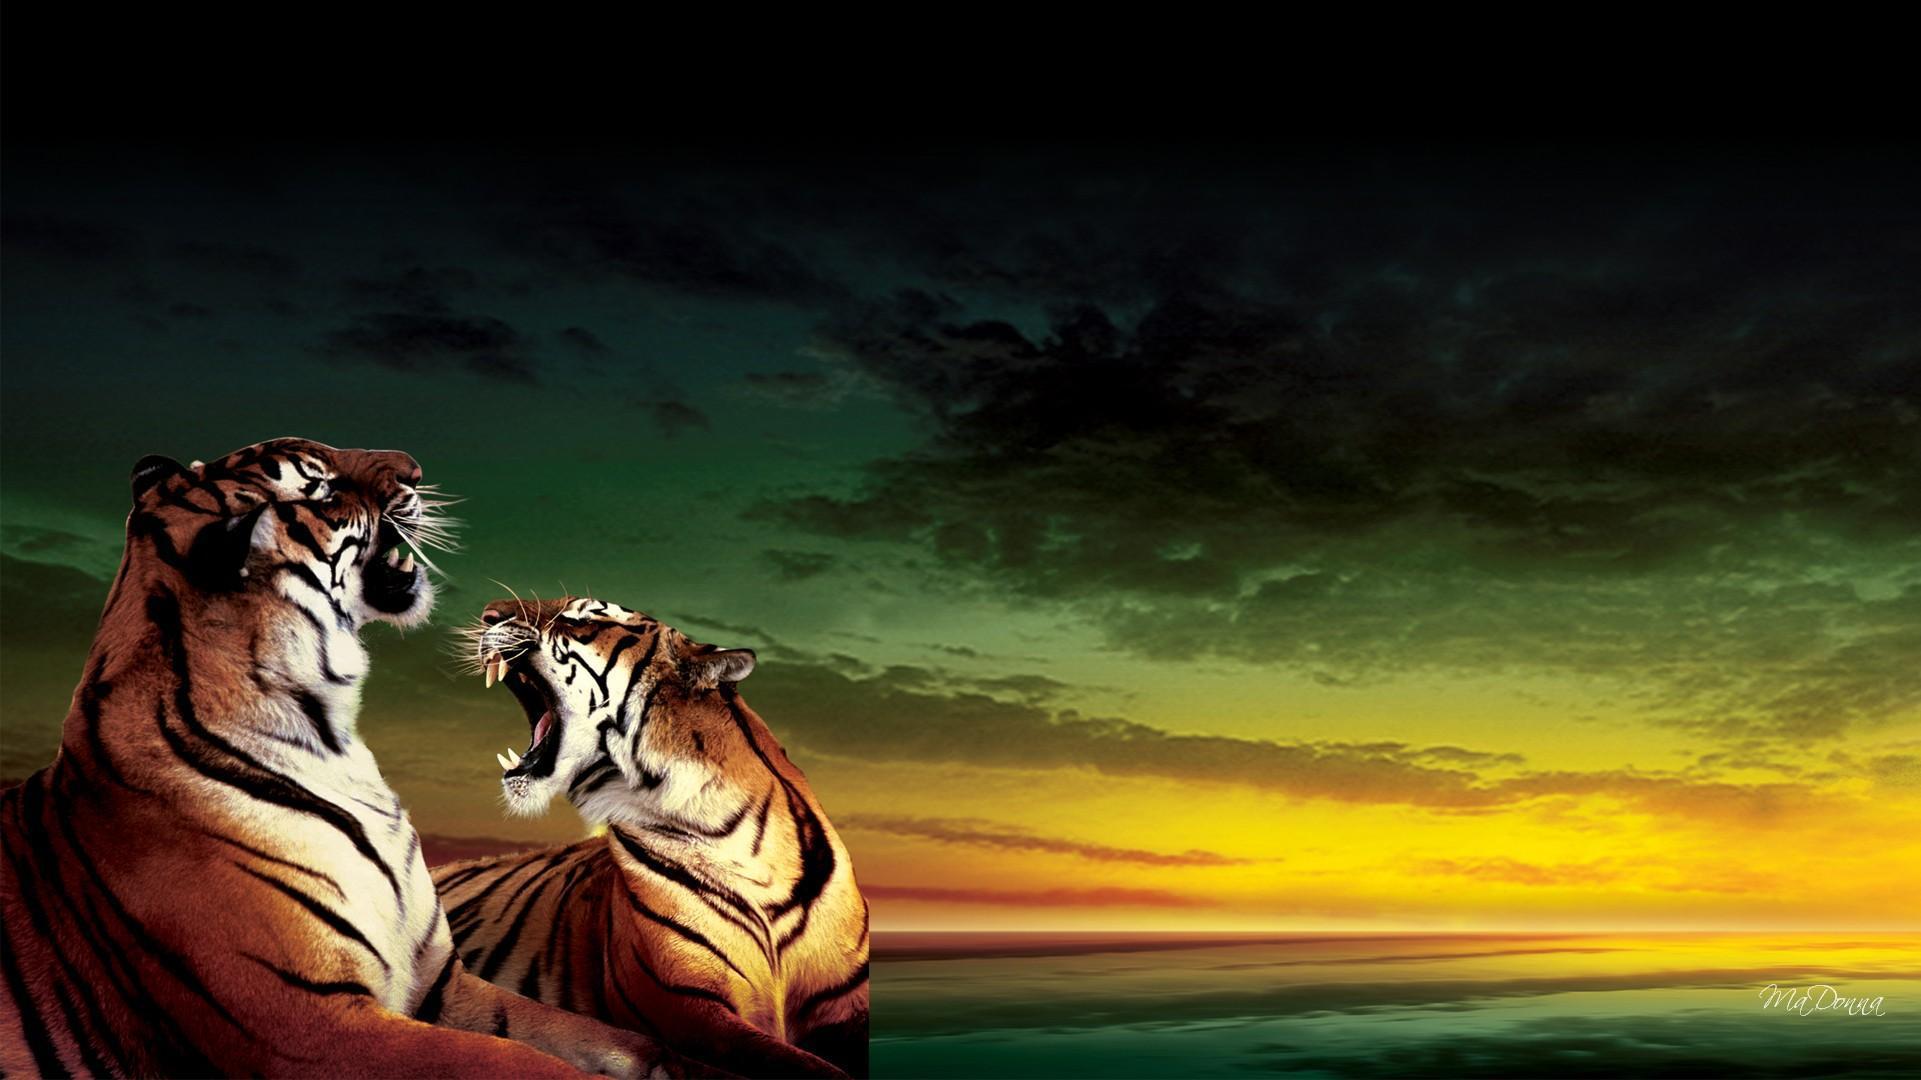 Tigers Roar HD desktop wallpaper, Widescreen, High